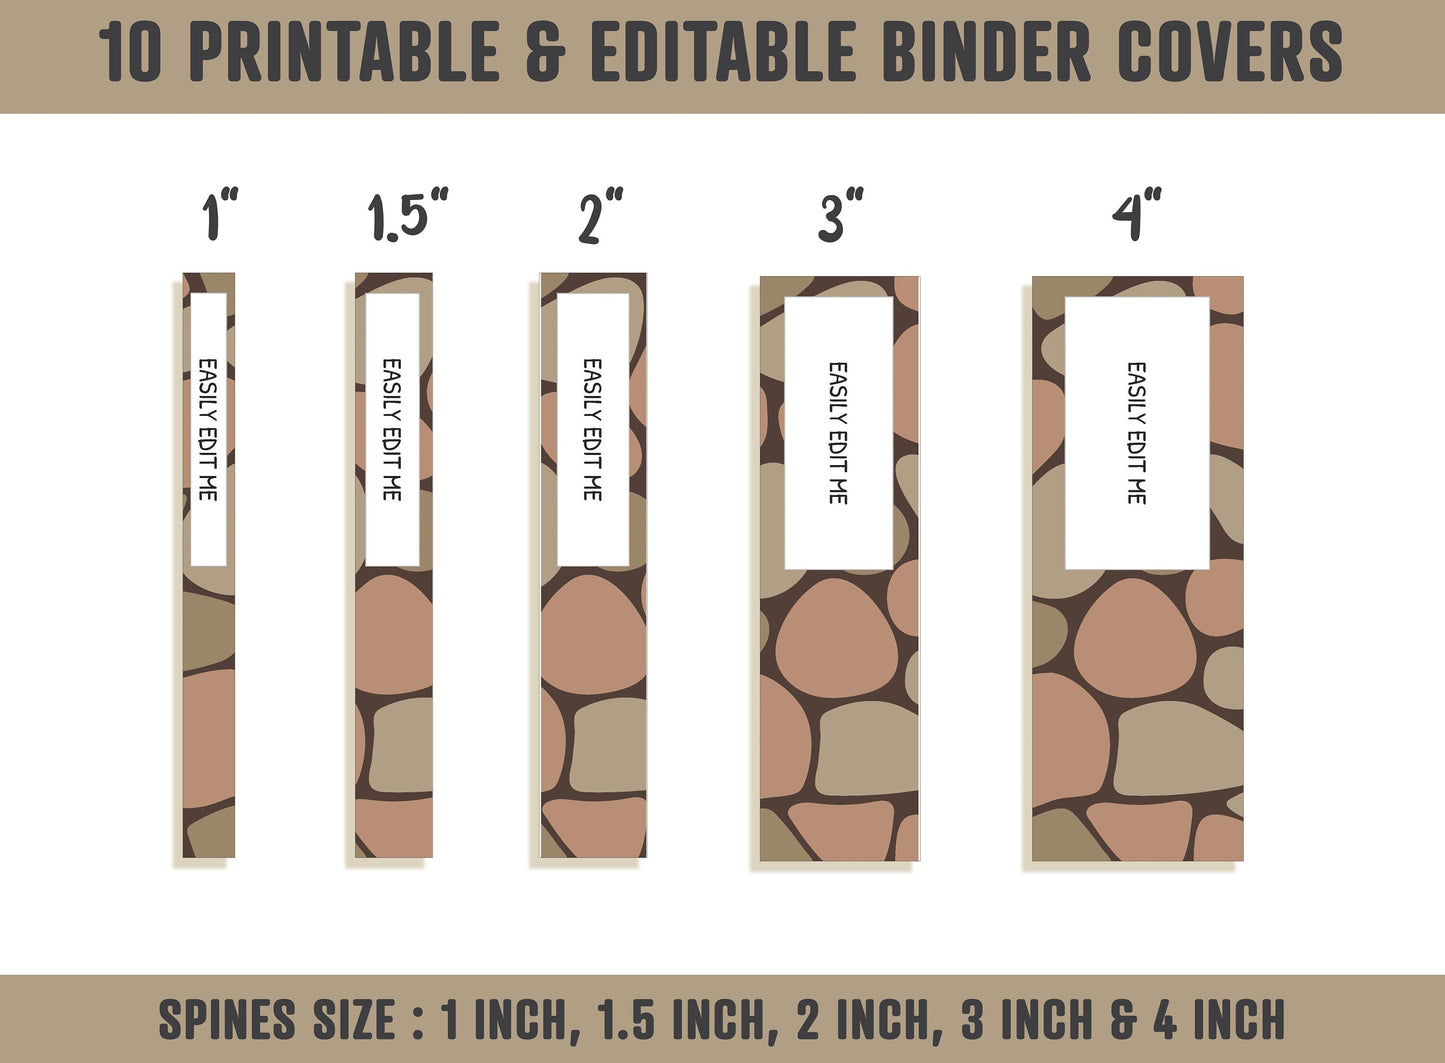 Paving Stones Street Binder Cover, 10 Printable & Editable Binder Covers + Spines, Binder Inserts, Teacher/School Planner Cover Template